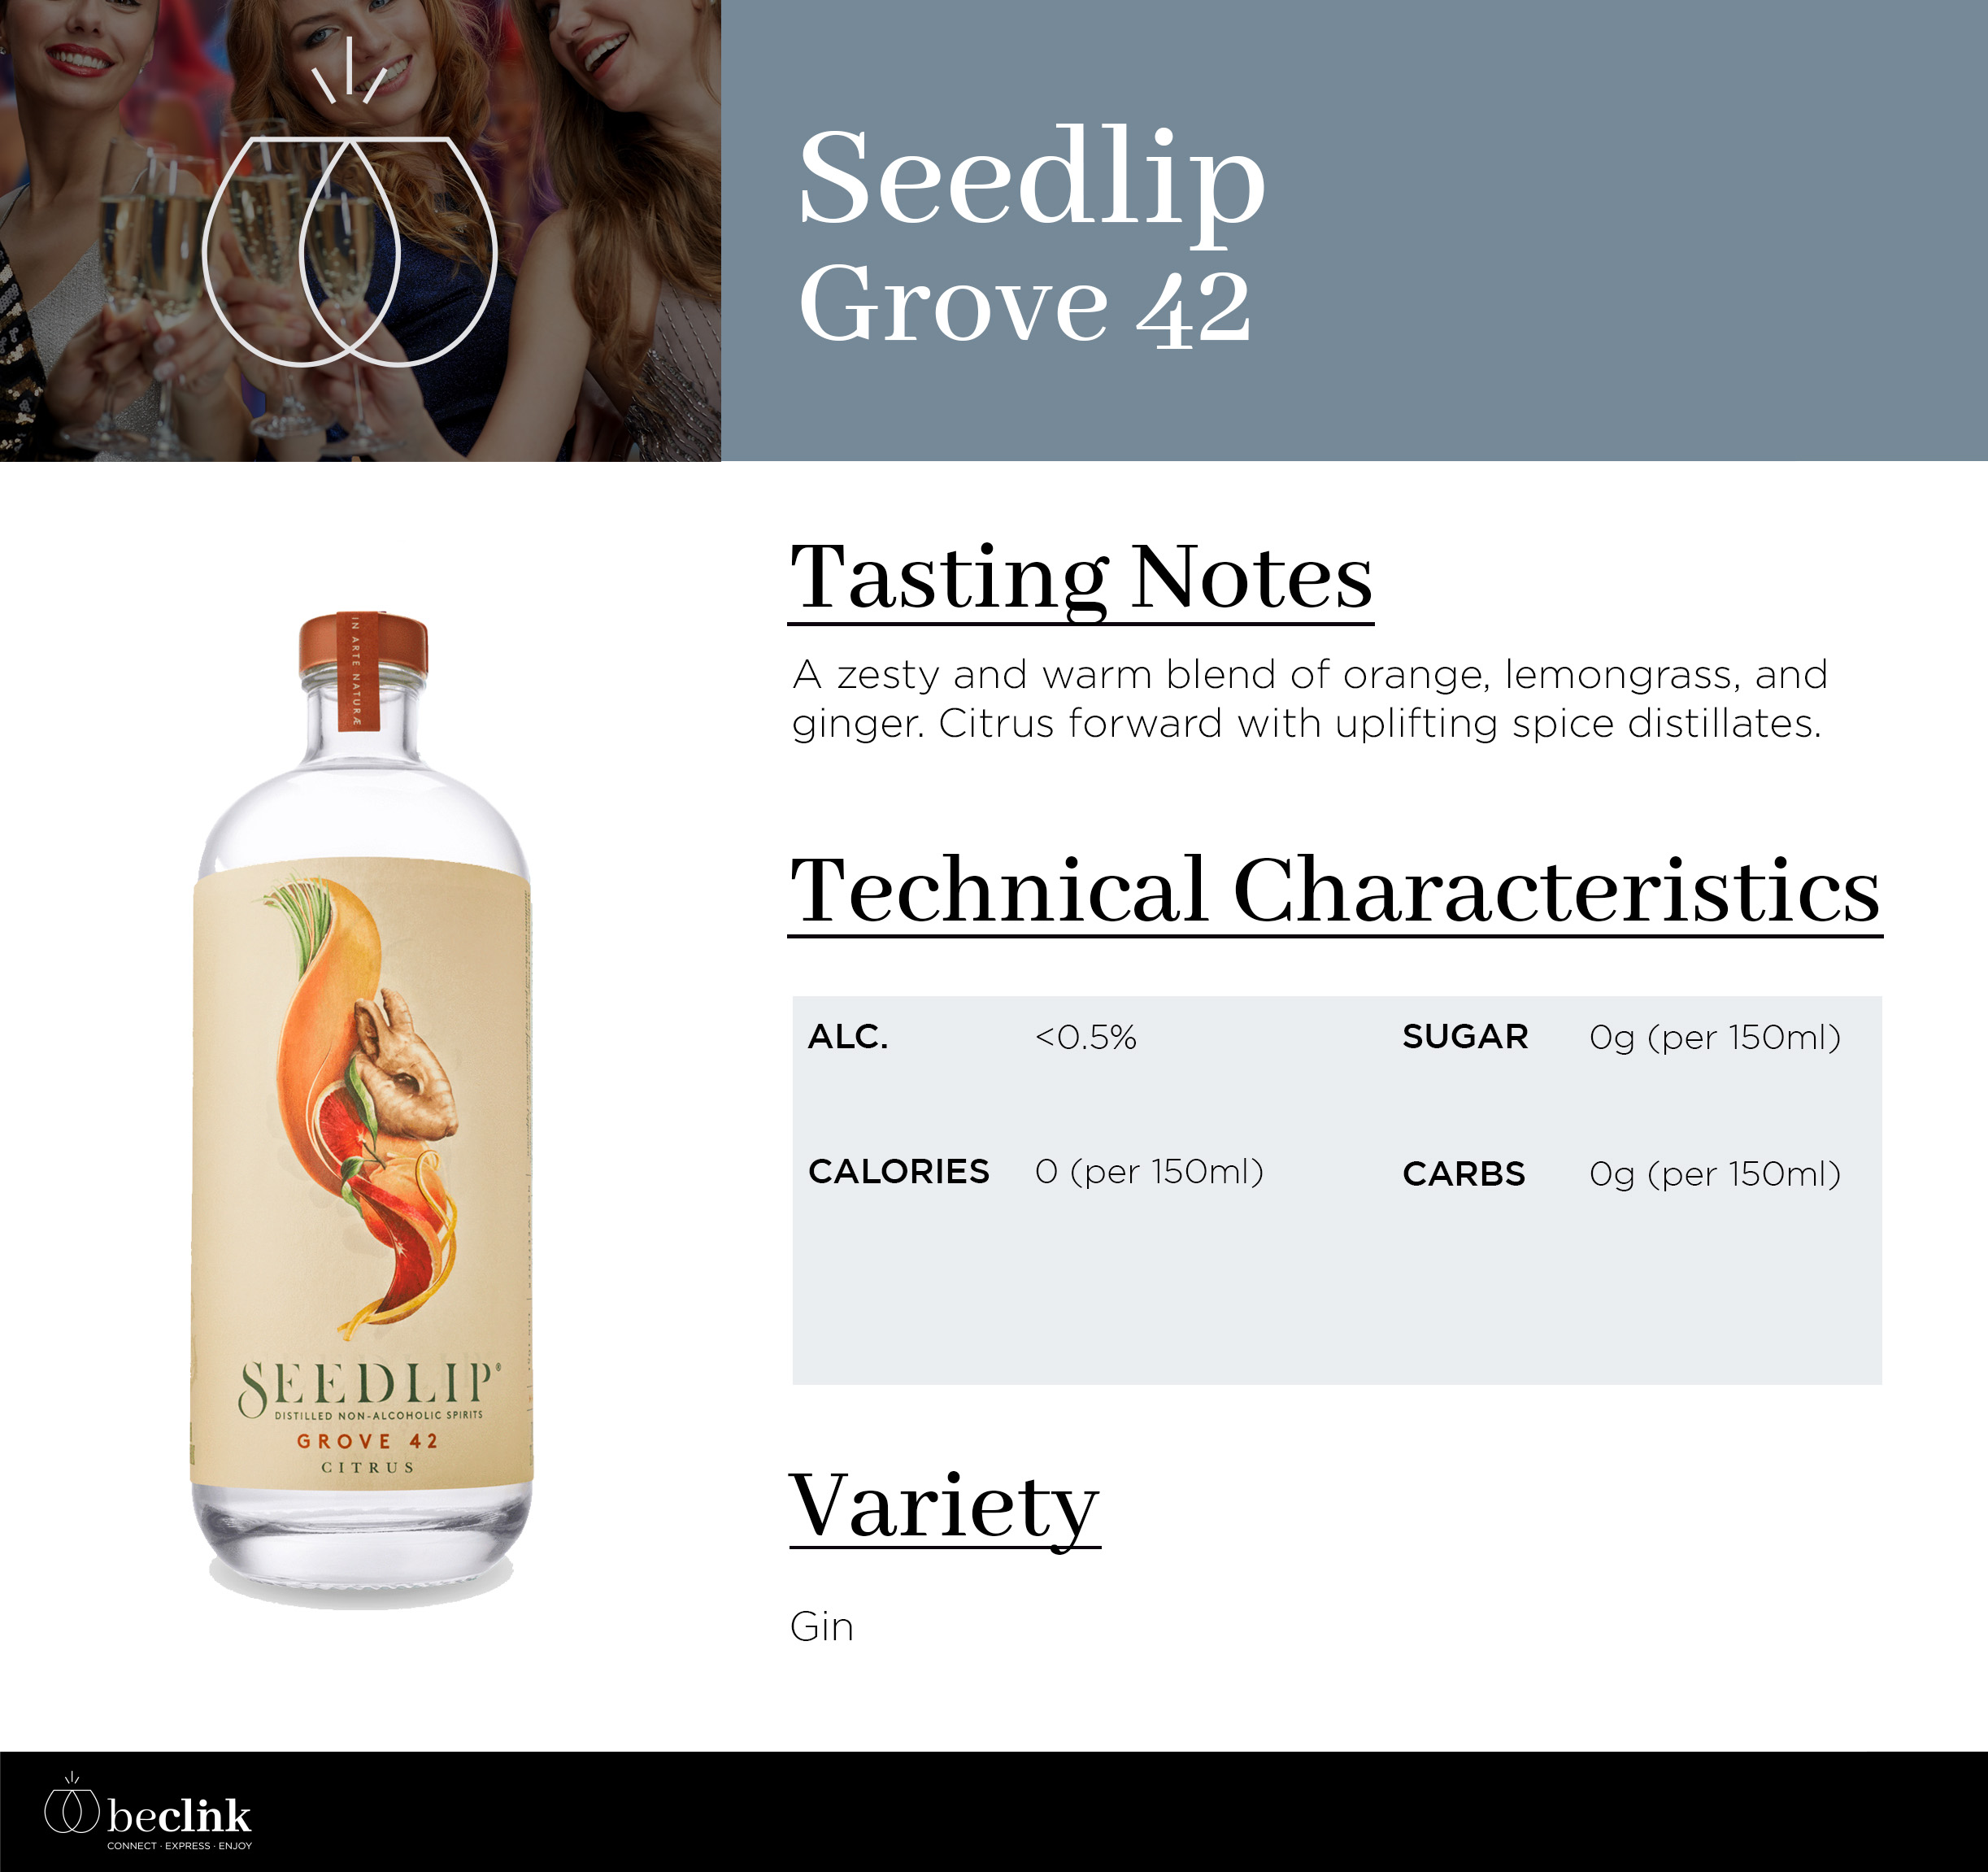 700ml Seedlip 42 Spirit Alternative Non-Alcoholic Grove